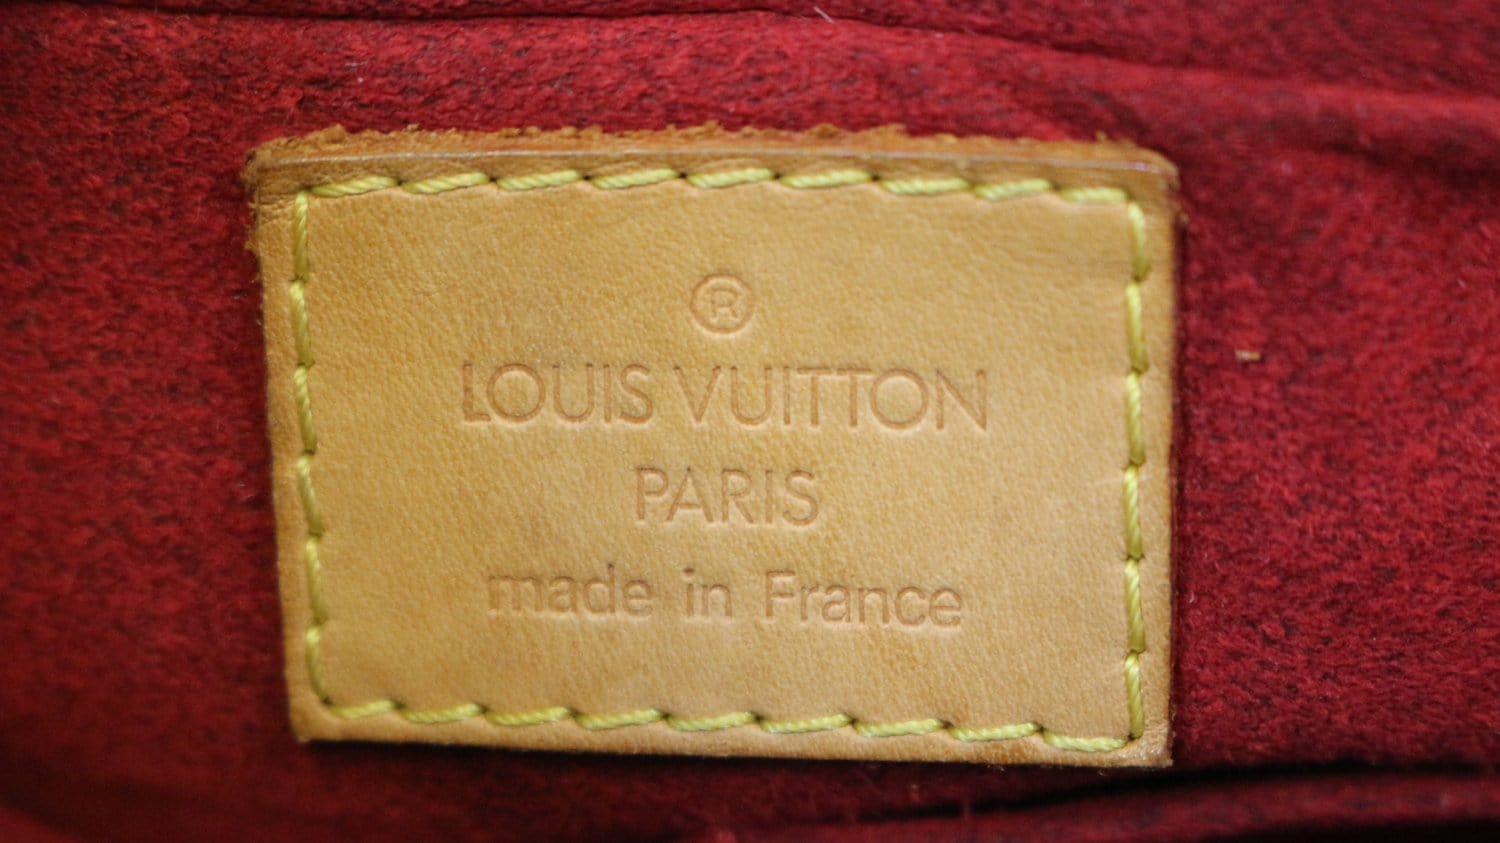 SALE! Authentic Louis Vuitton Monogram Viva Cite MM